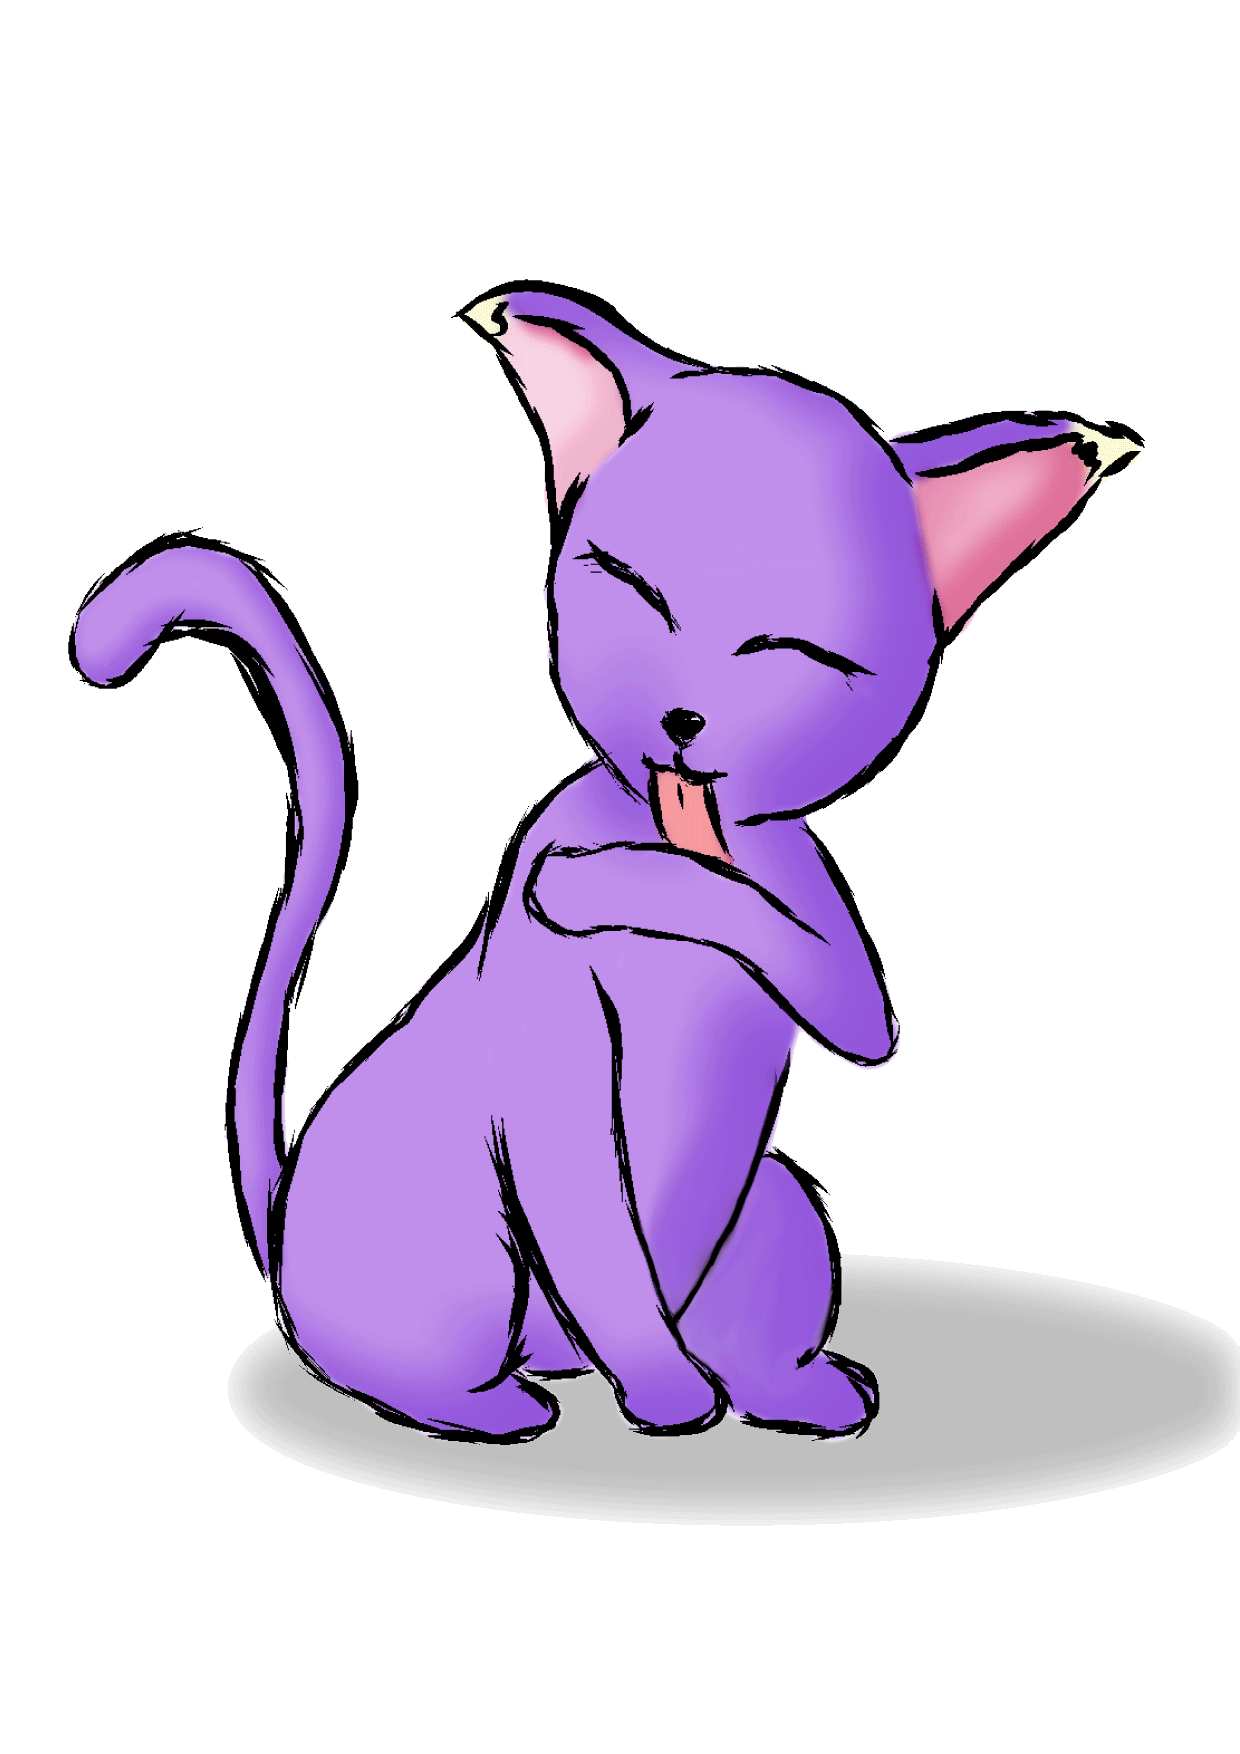 Animated Cute Cat Gif : Cat Gif Animated Cats Cute Cartoon Gifs Kawaii 